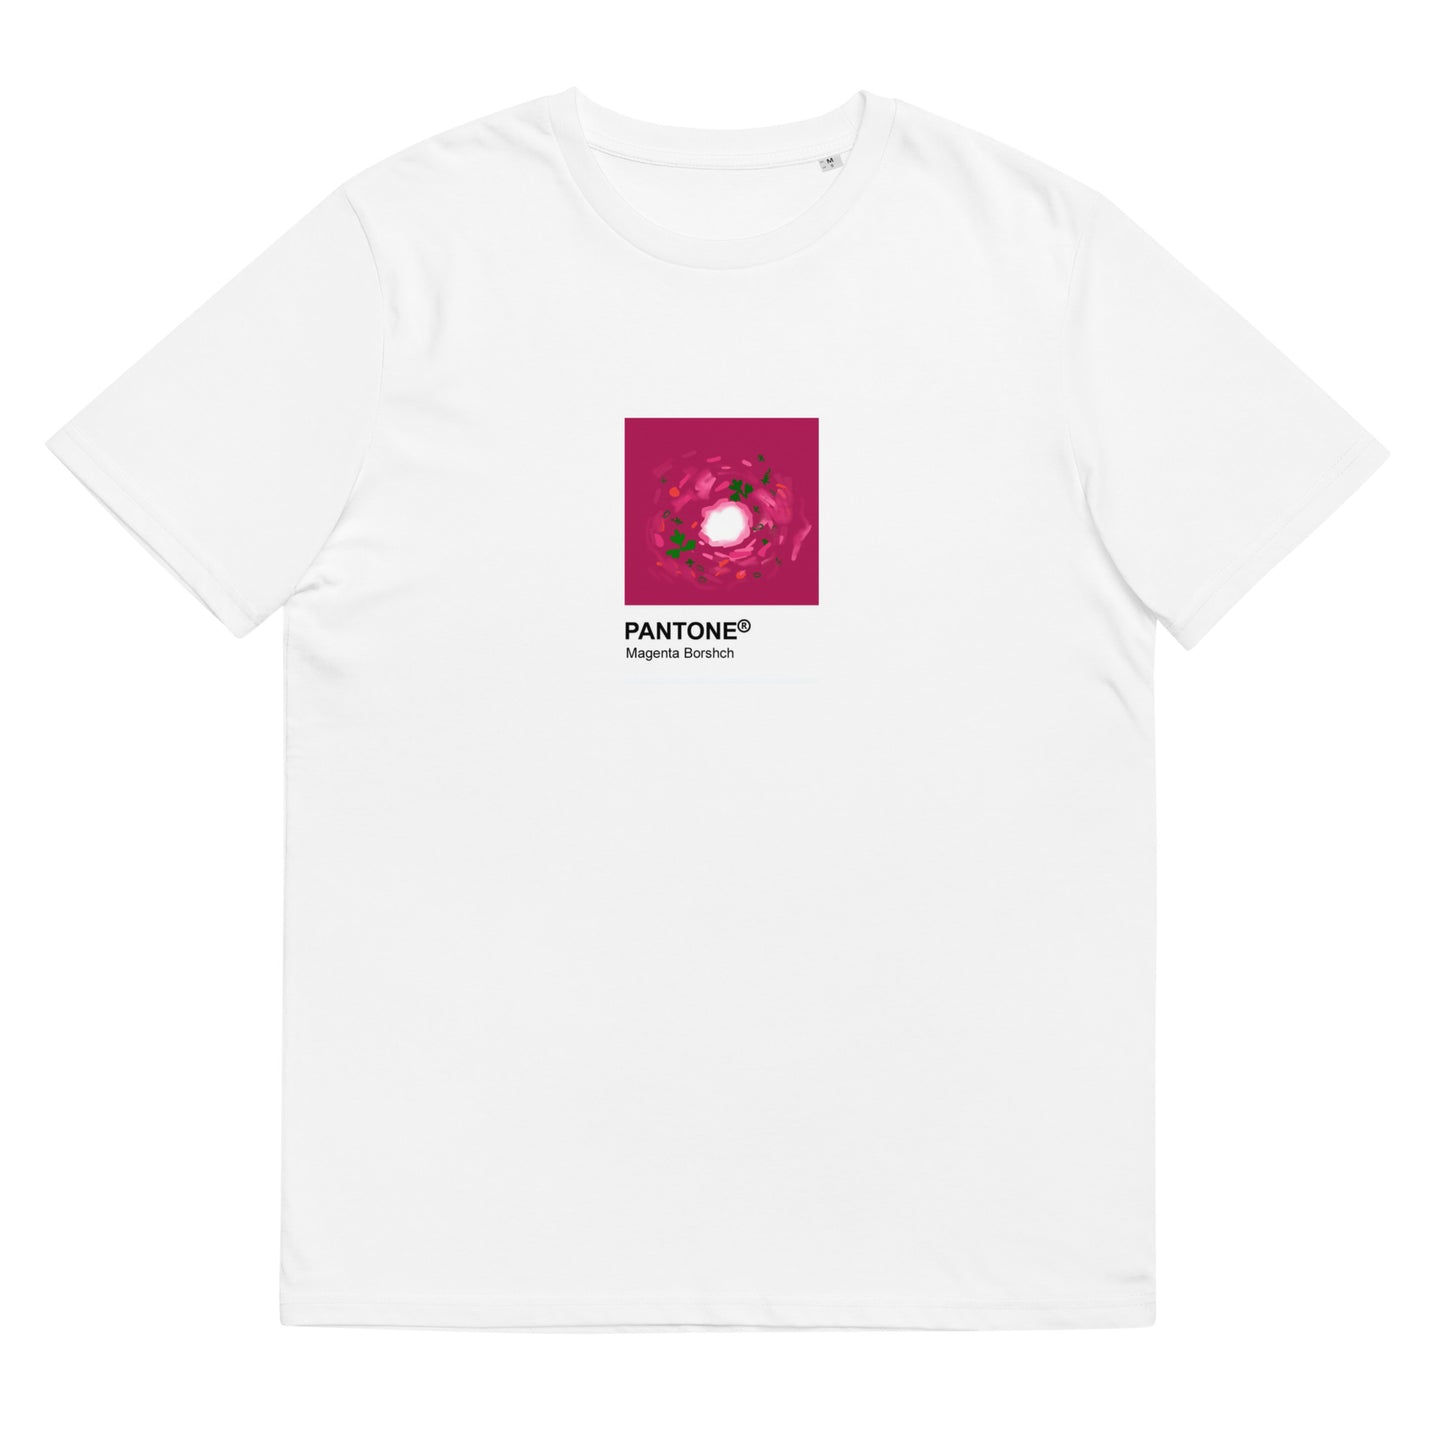 Borshch printed unisex organic cotton t-shirt in white